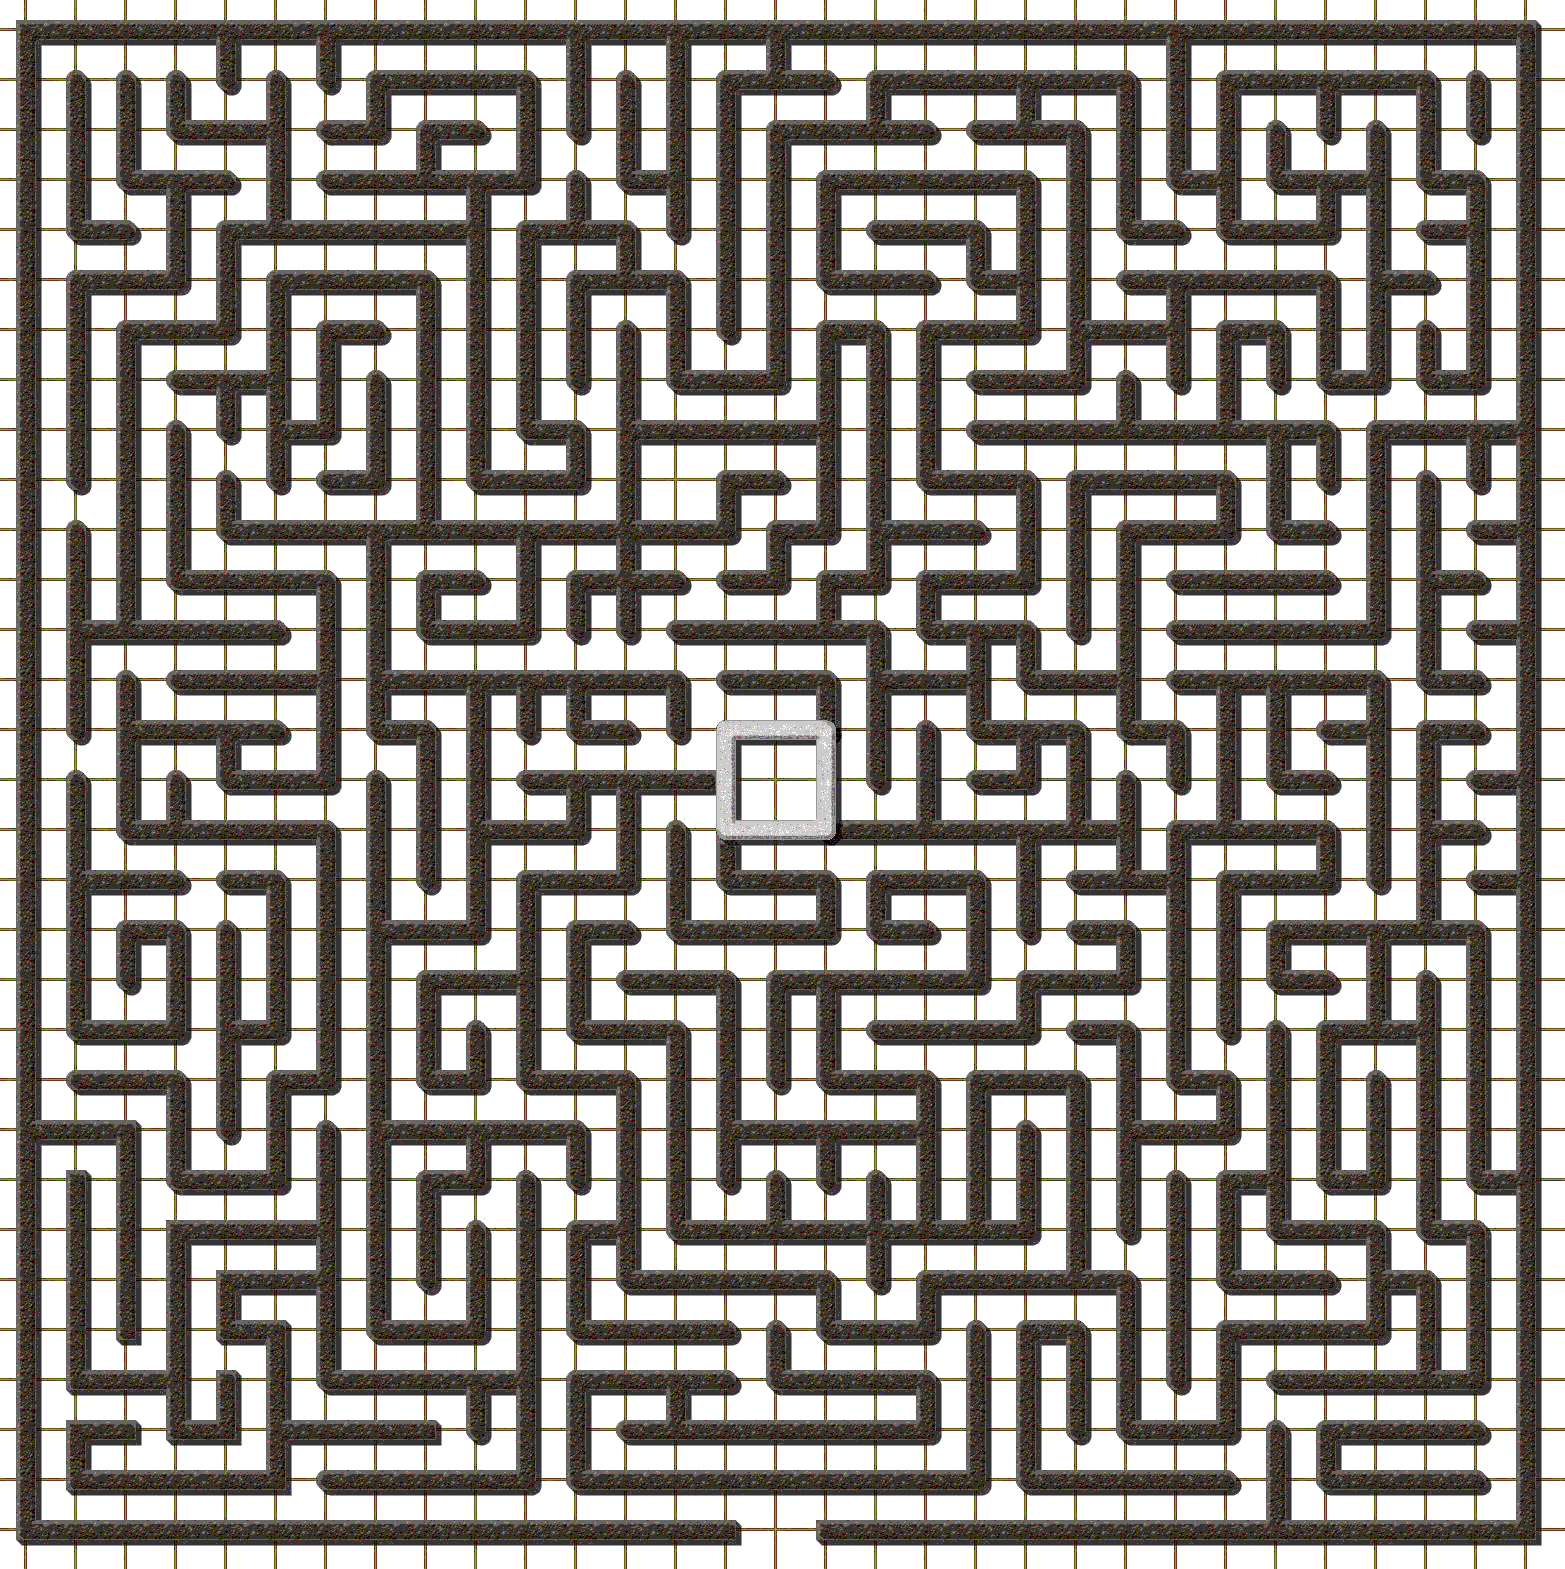 2FE_labyrinth_template2